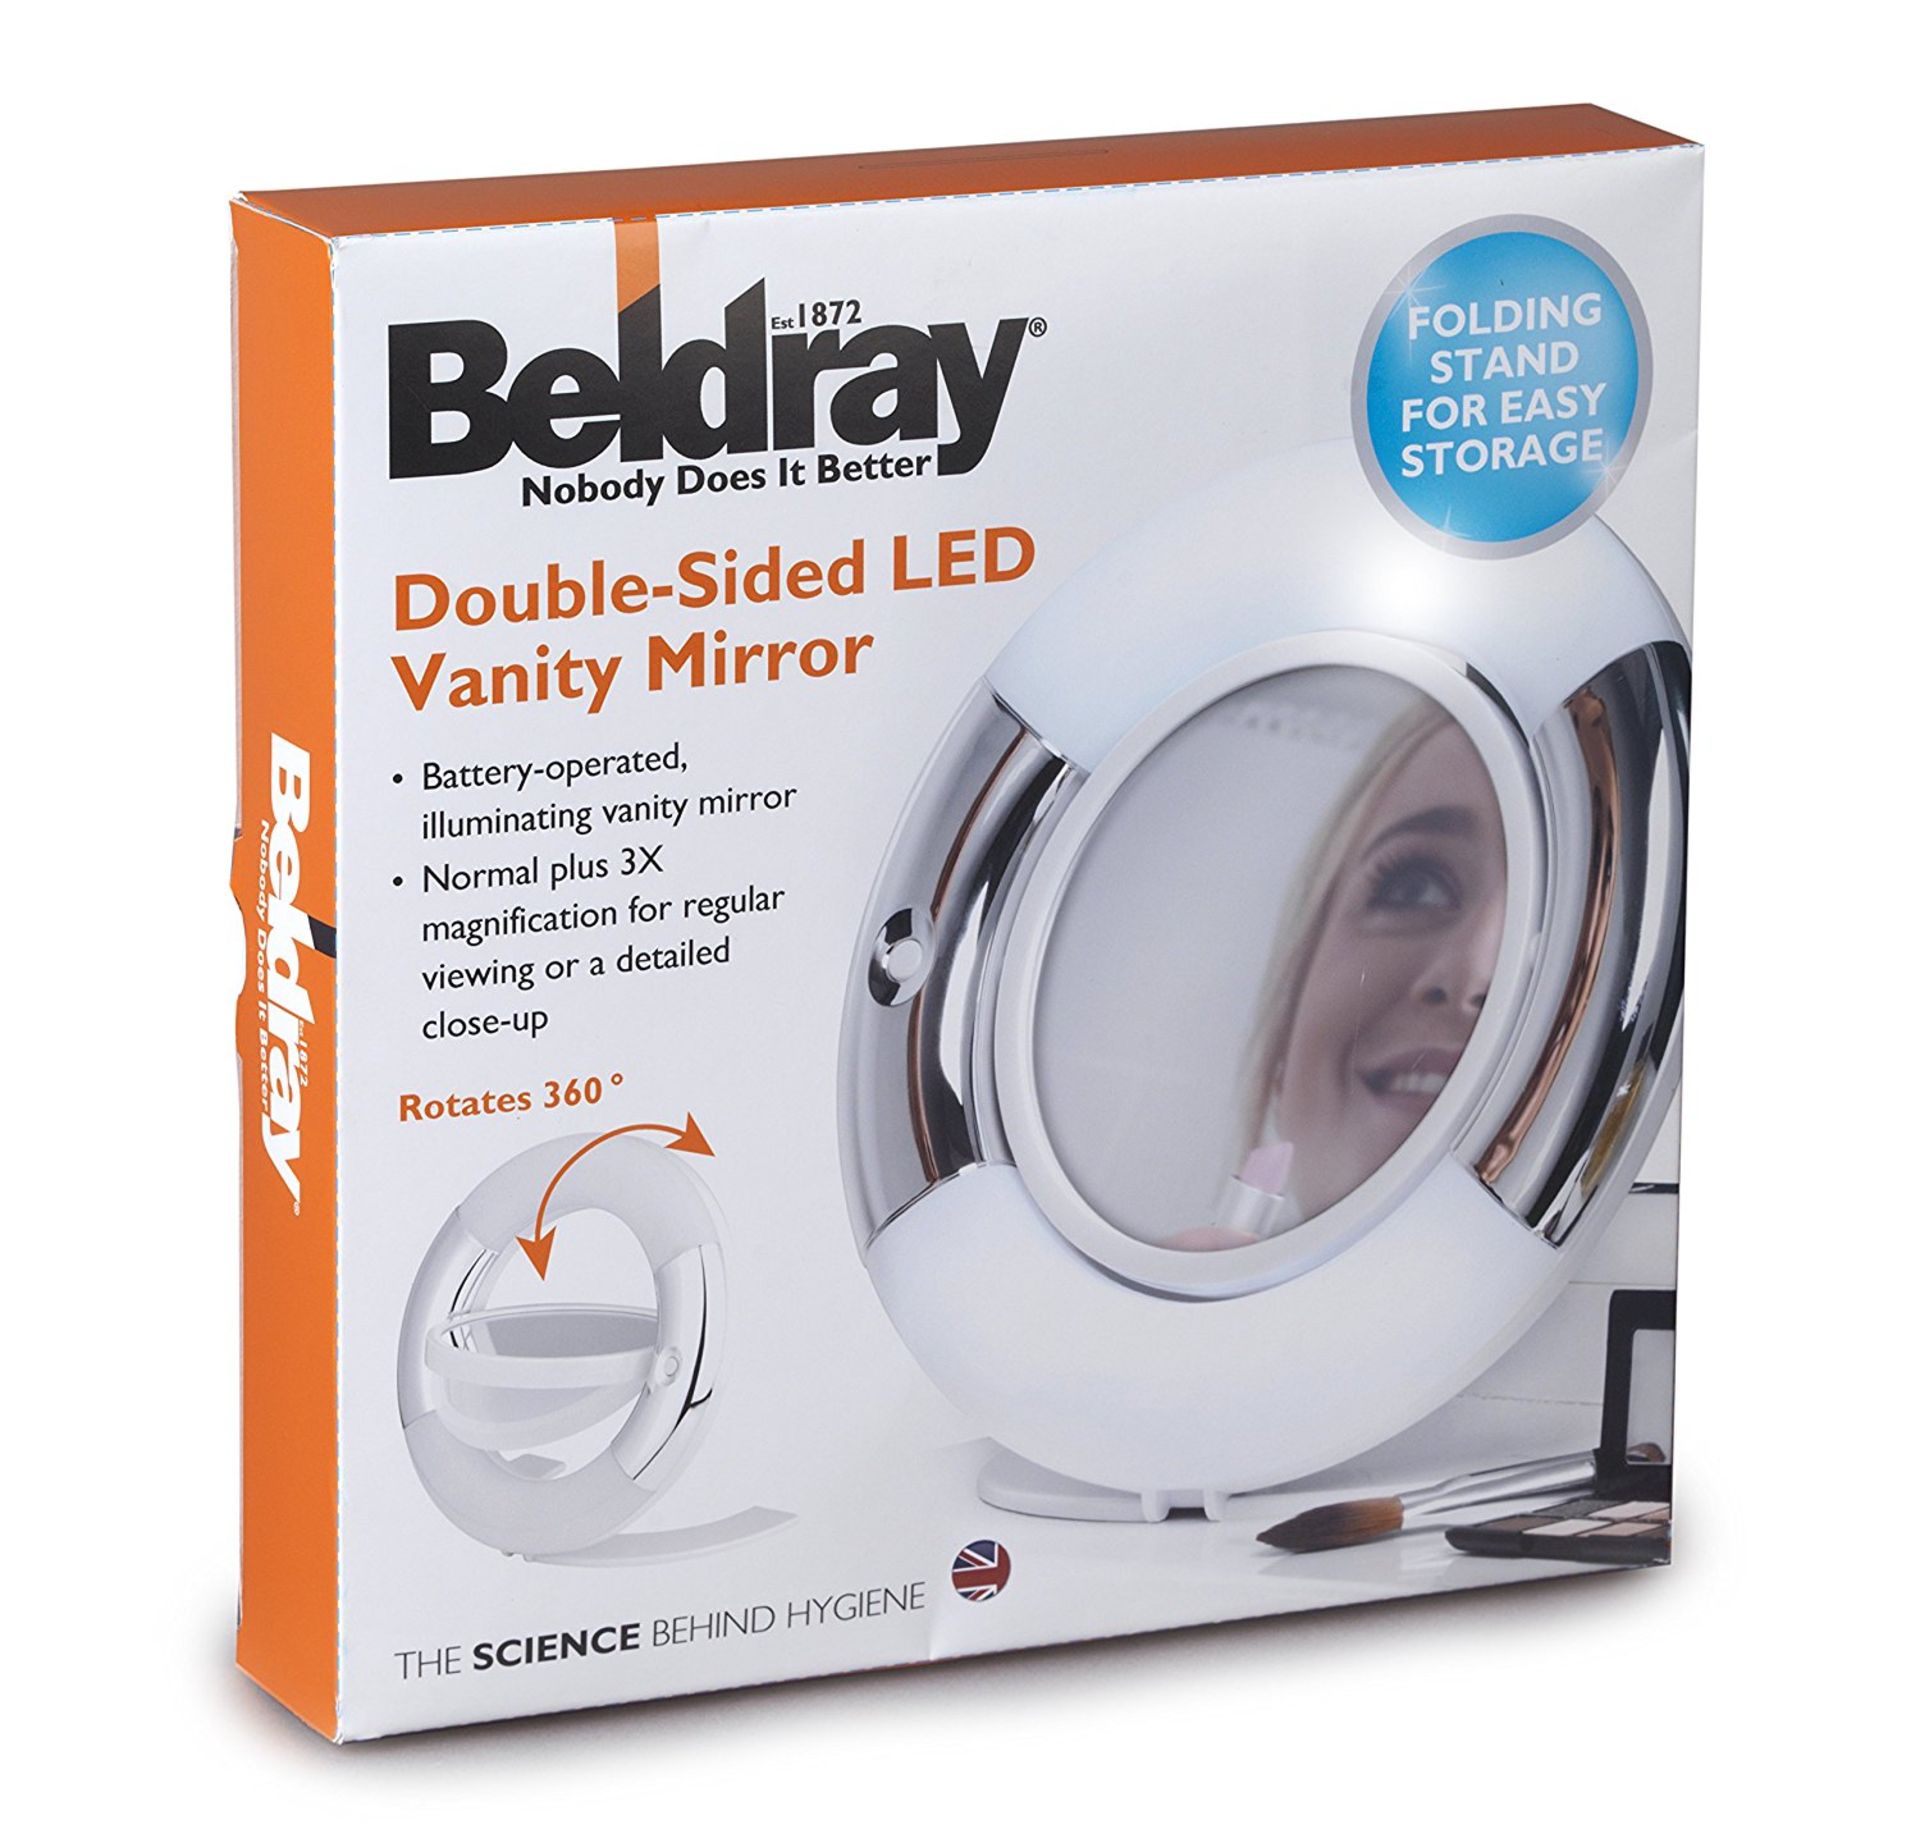 V *TRADE QTY* Brand New Beldray Double-Sided LED Vanity Mirror - 360 Degree Rotation - Easy